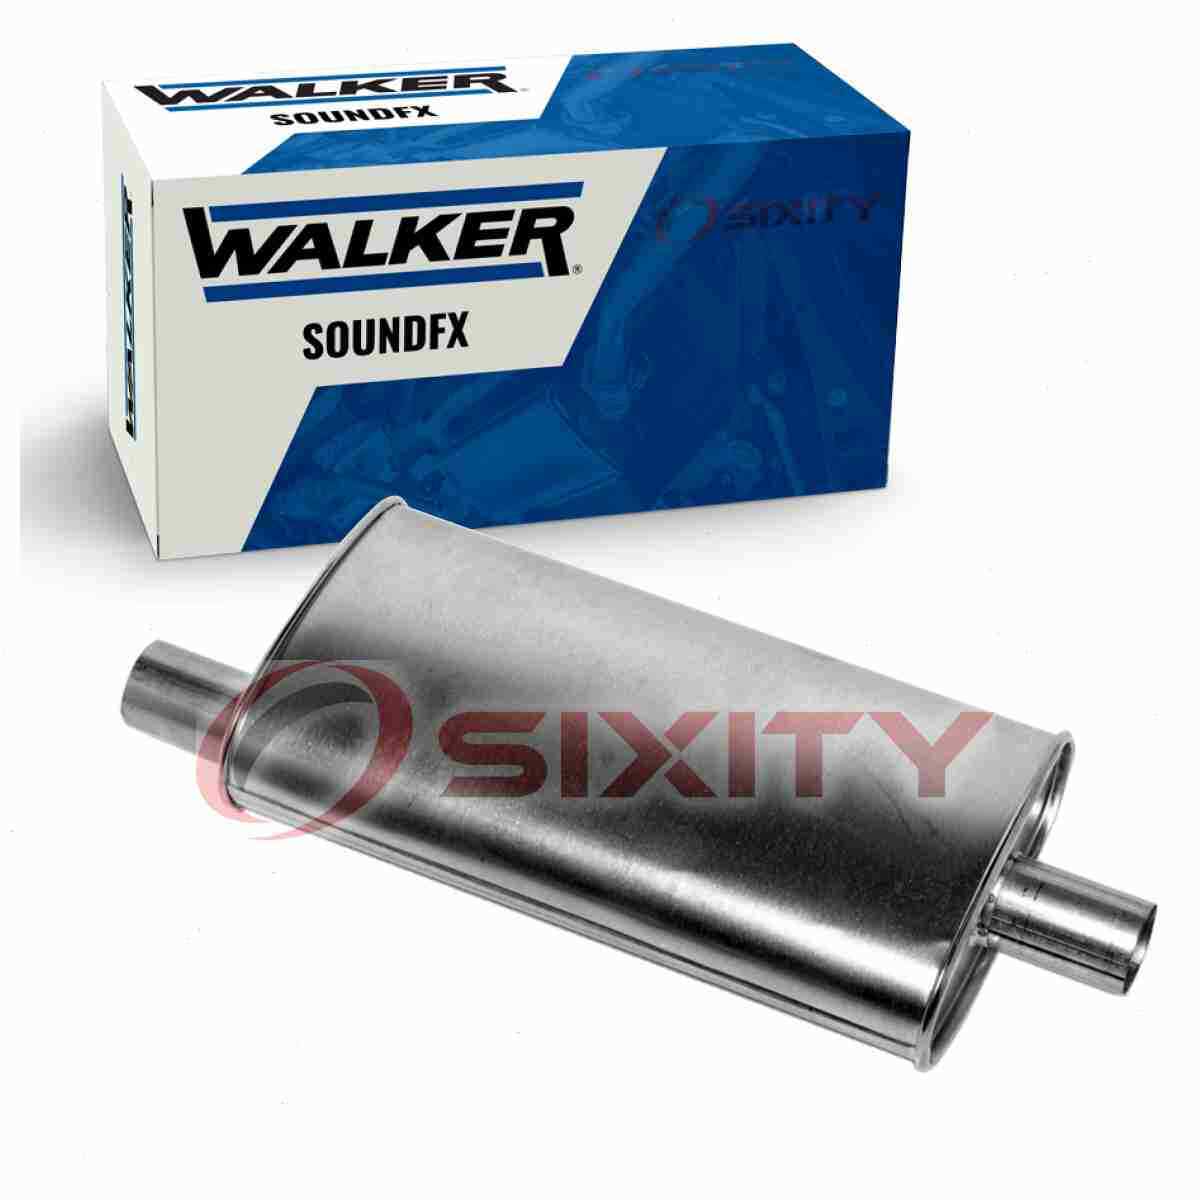 Walker SoundFX Left Exhaust Muffler for 1975-1976 Ford LTD 7.5L V8 Mufflers  je